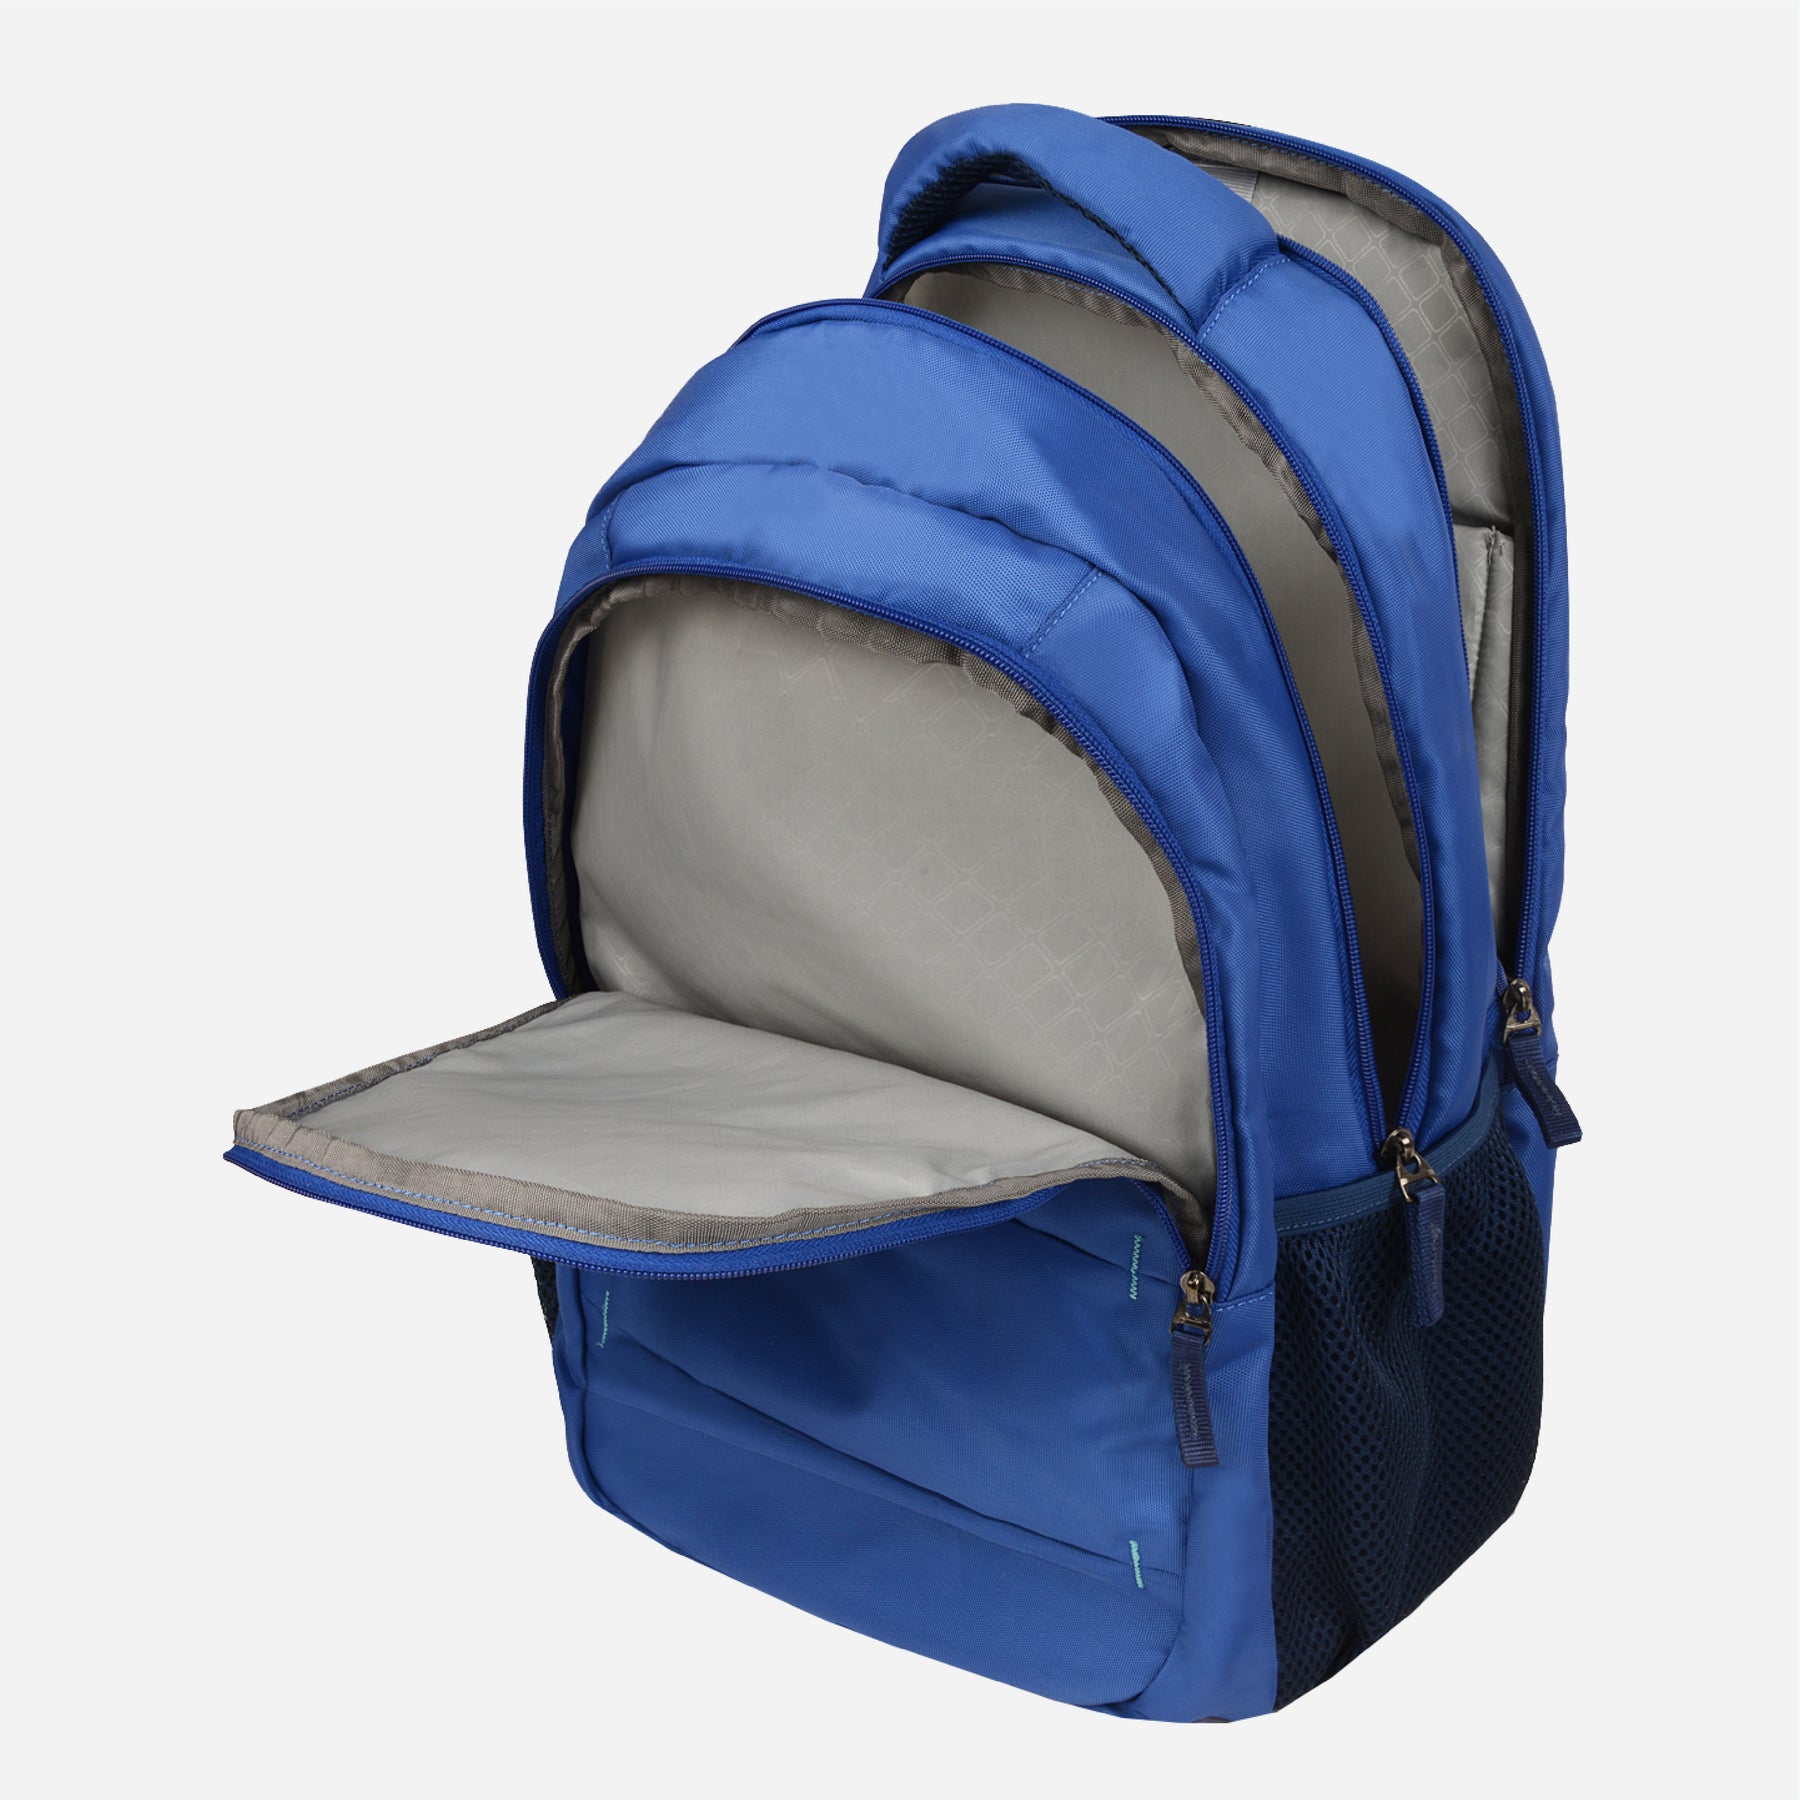 Snap Laptop Backpack - Blue